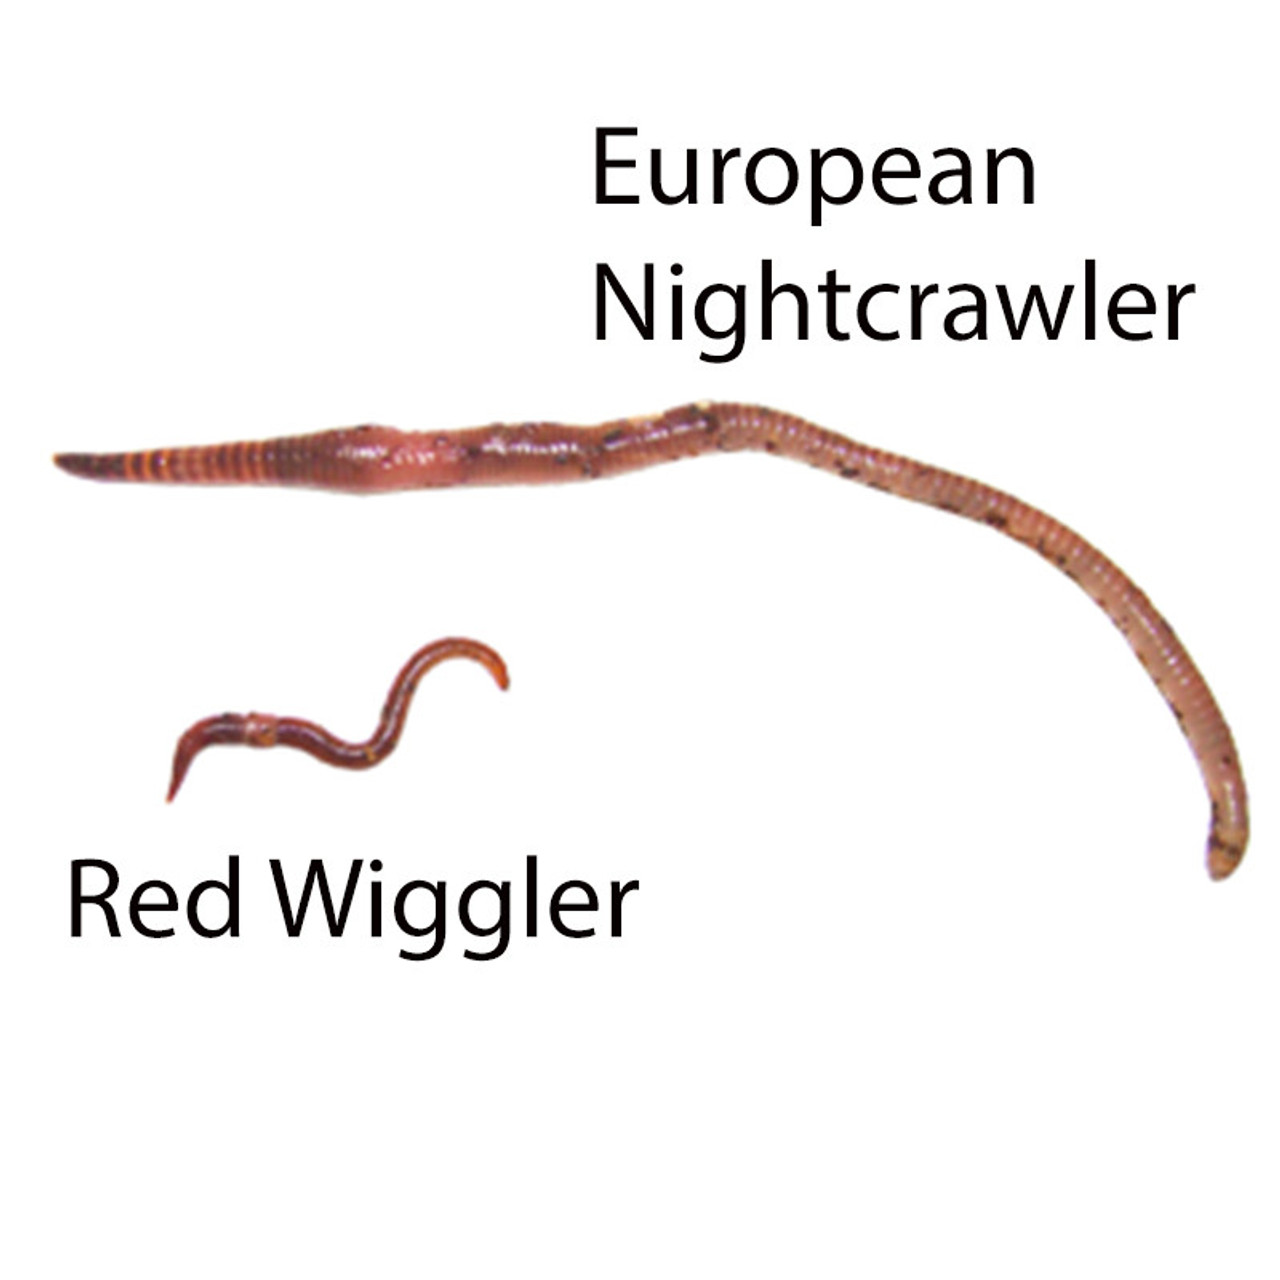 50 Live Bait Fishing Worms - European Nightcrawlers